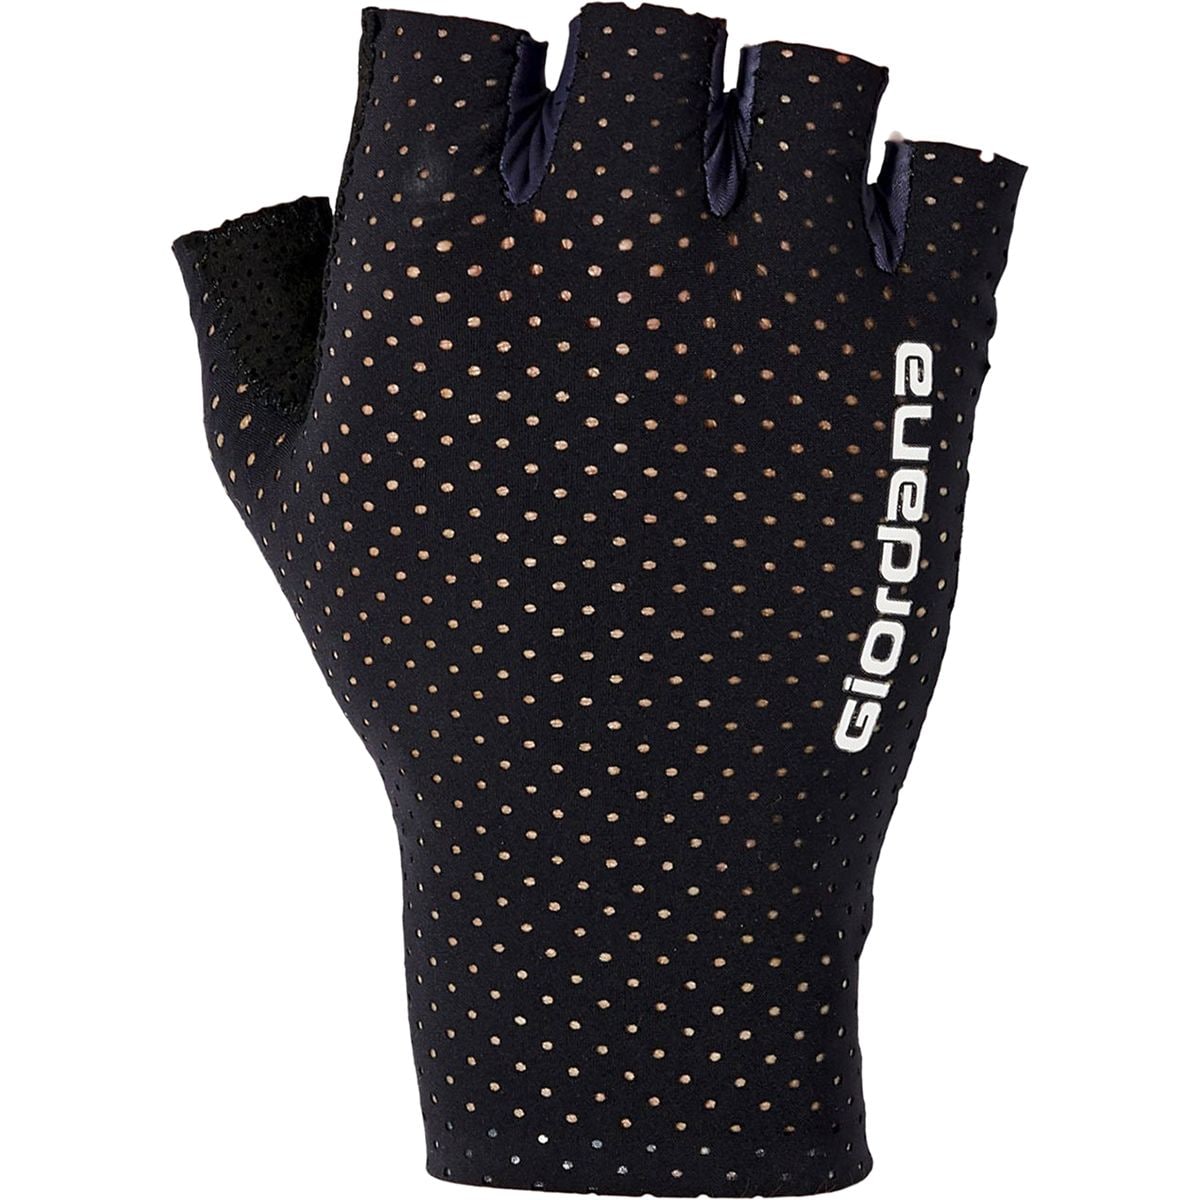 Giordana Aero Lyte Glove - Men's Black/Titanium, L